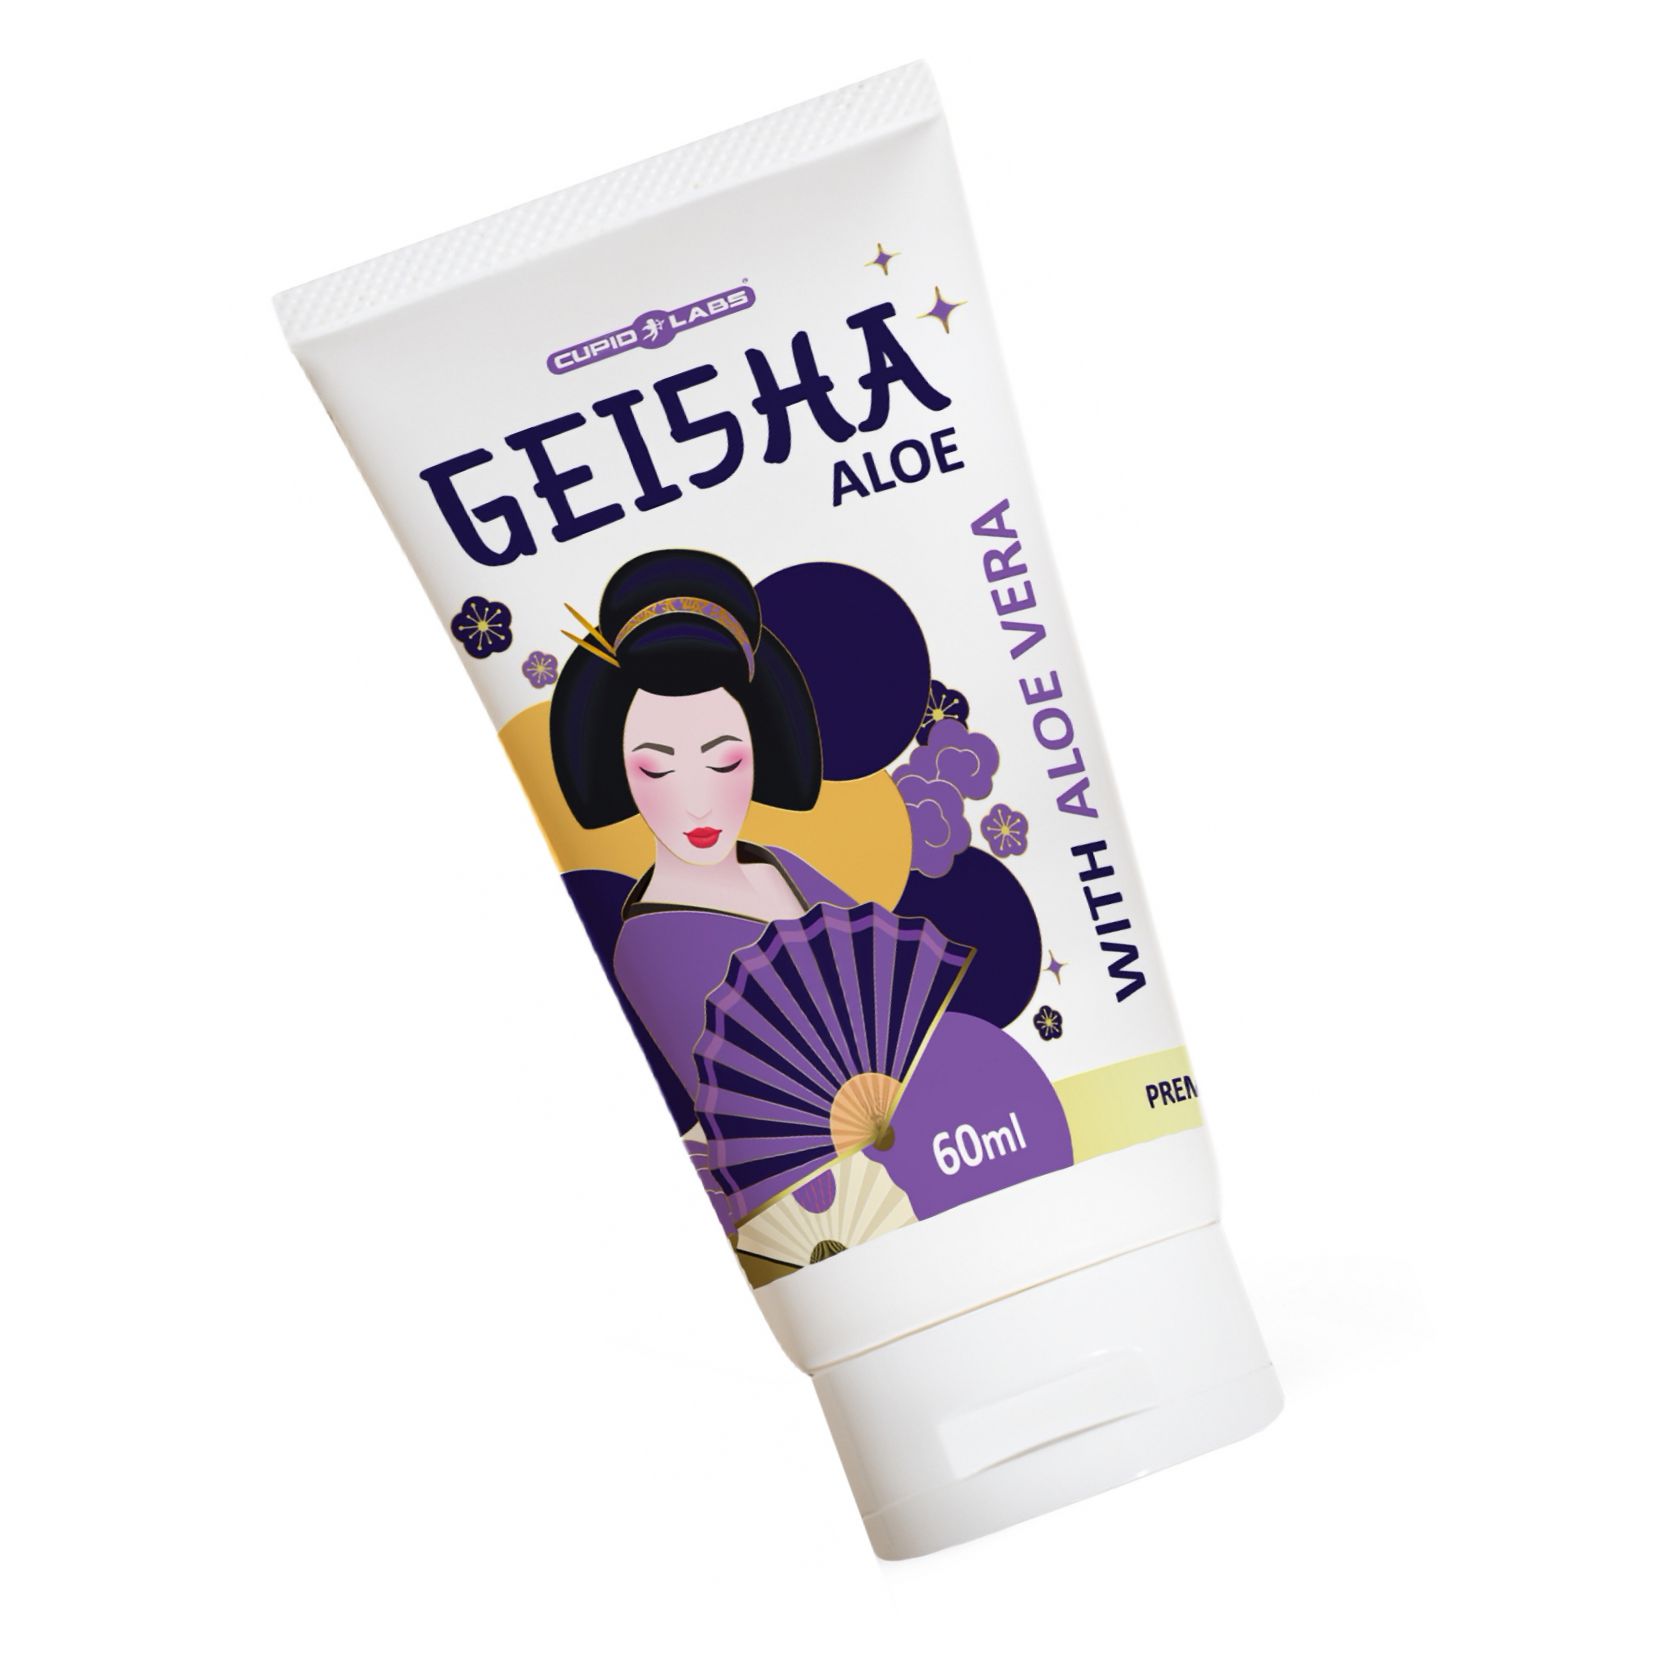 Lubrifiant Geisha Aloe Vera Premium